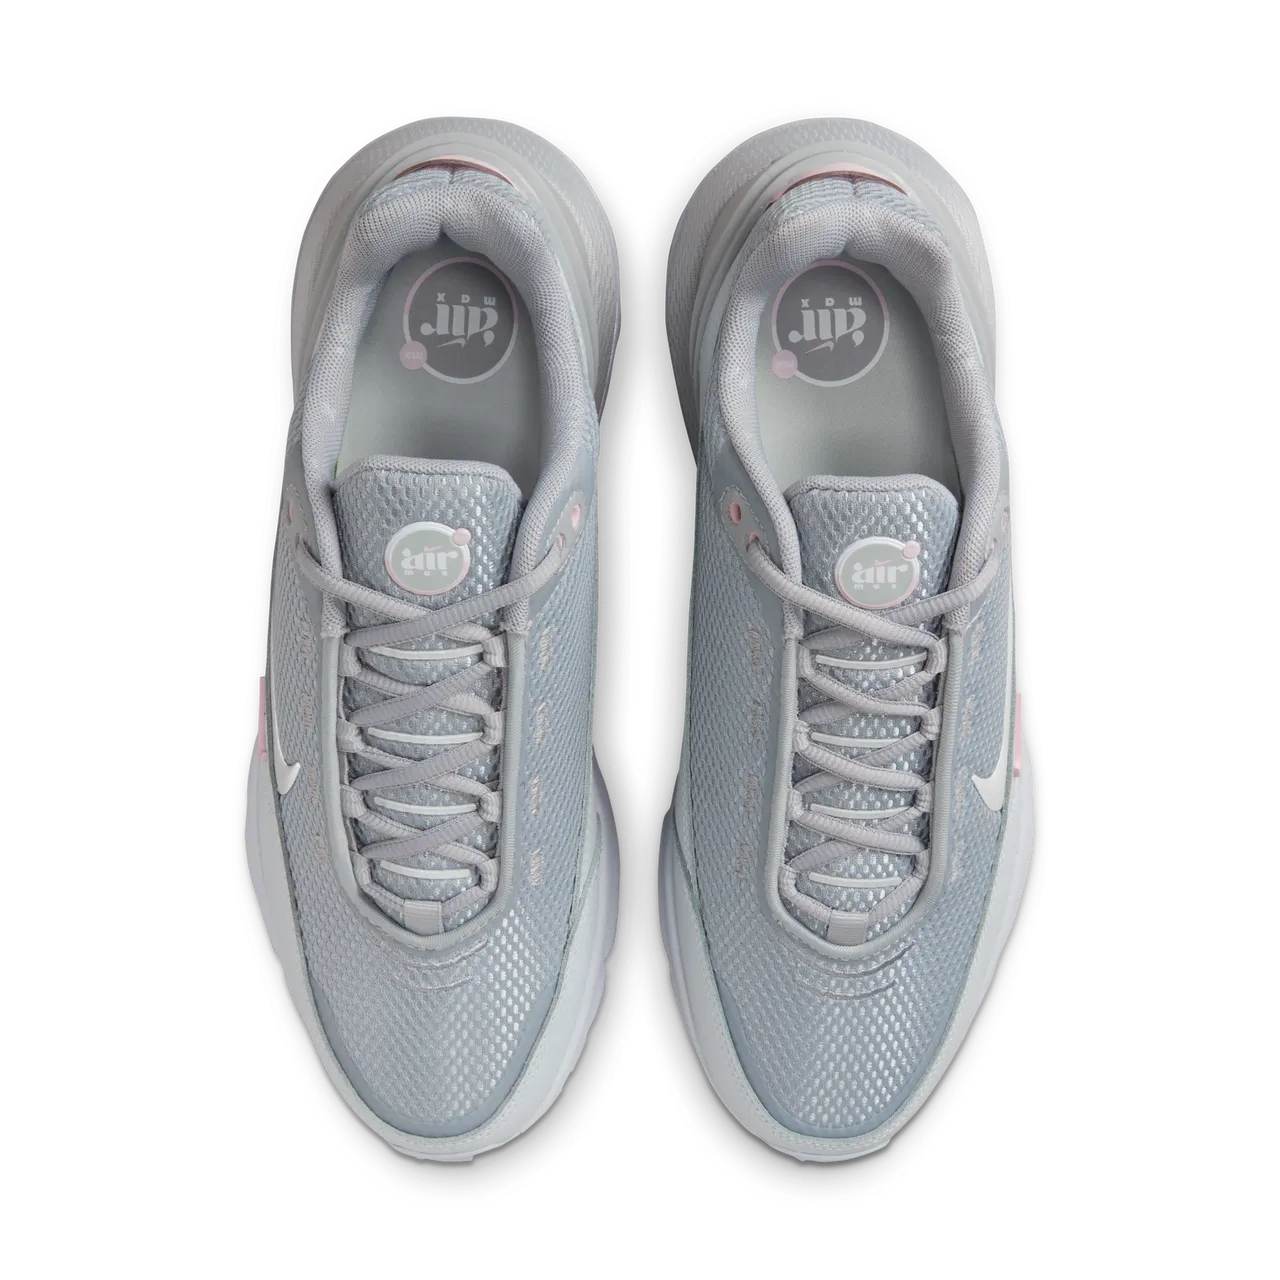 Nike Air Max Pulse Women's Shoes - Grey